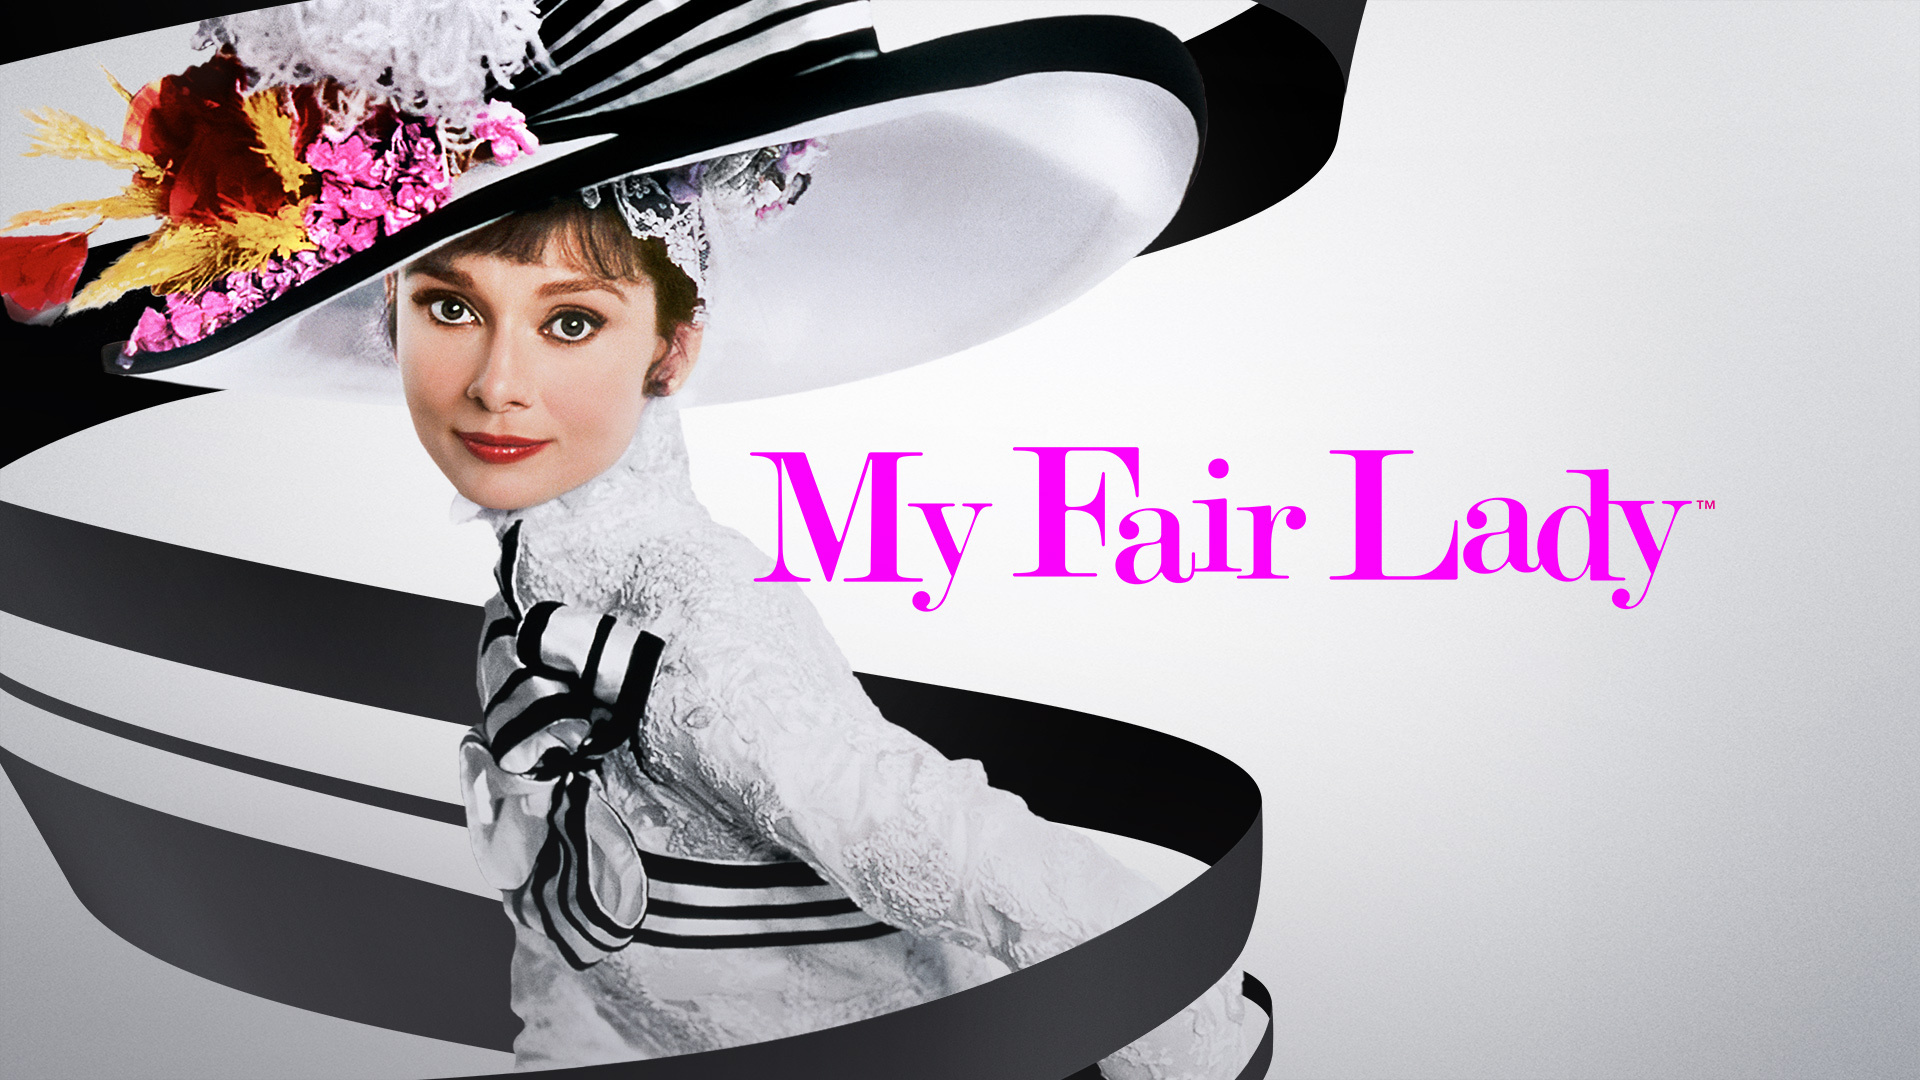 My Fair Lady - Watch Full Movie on Paramount Plus